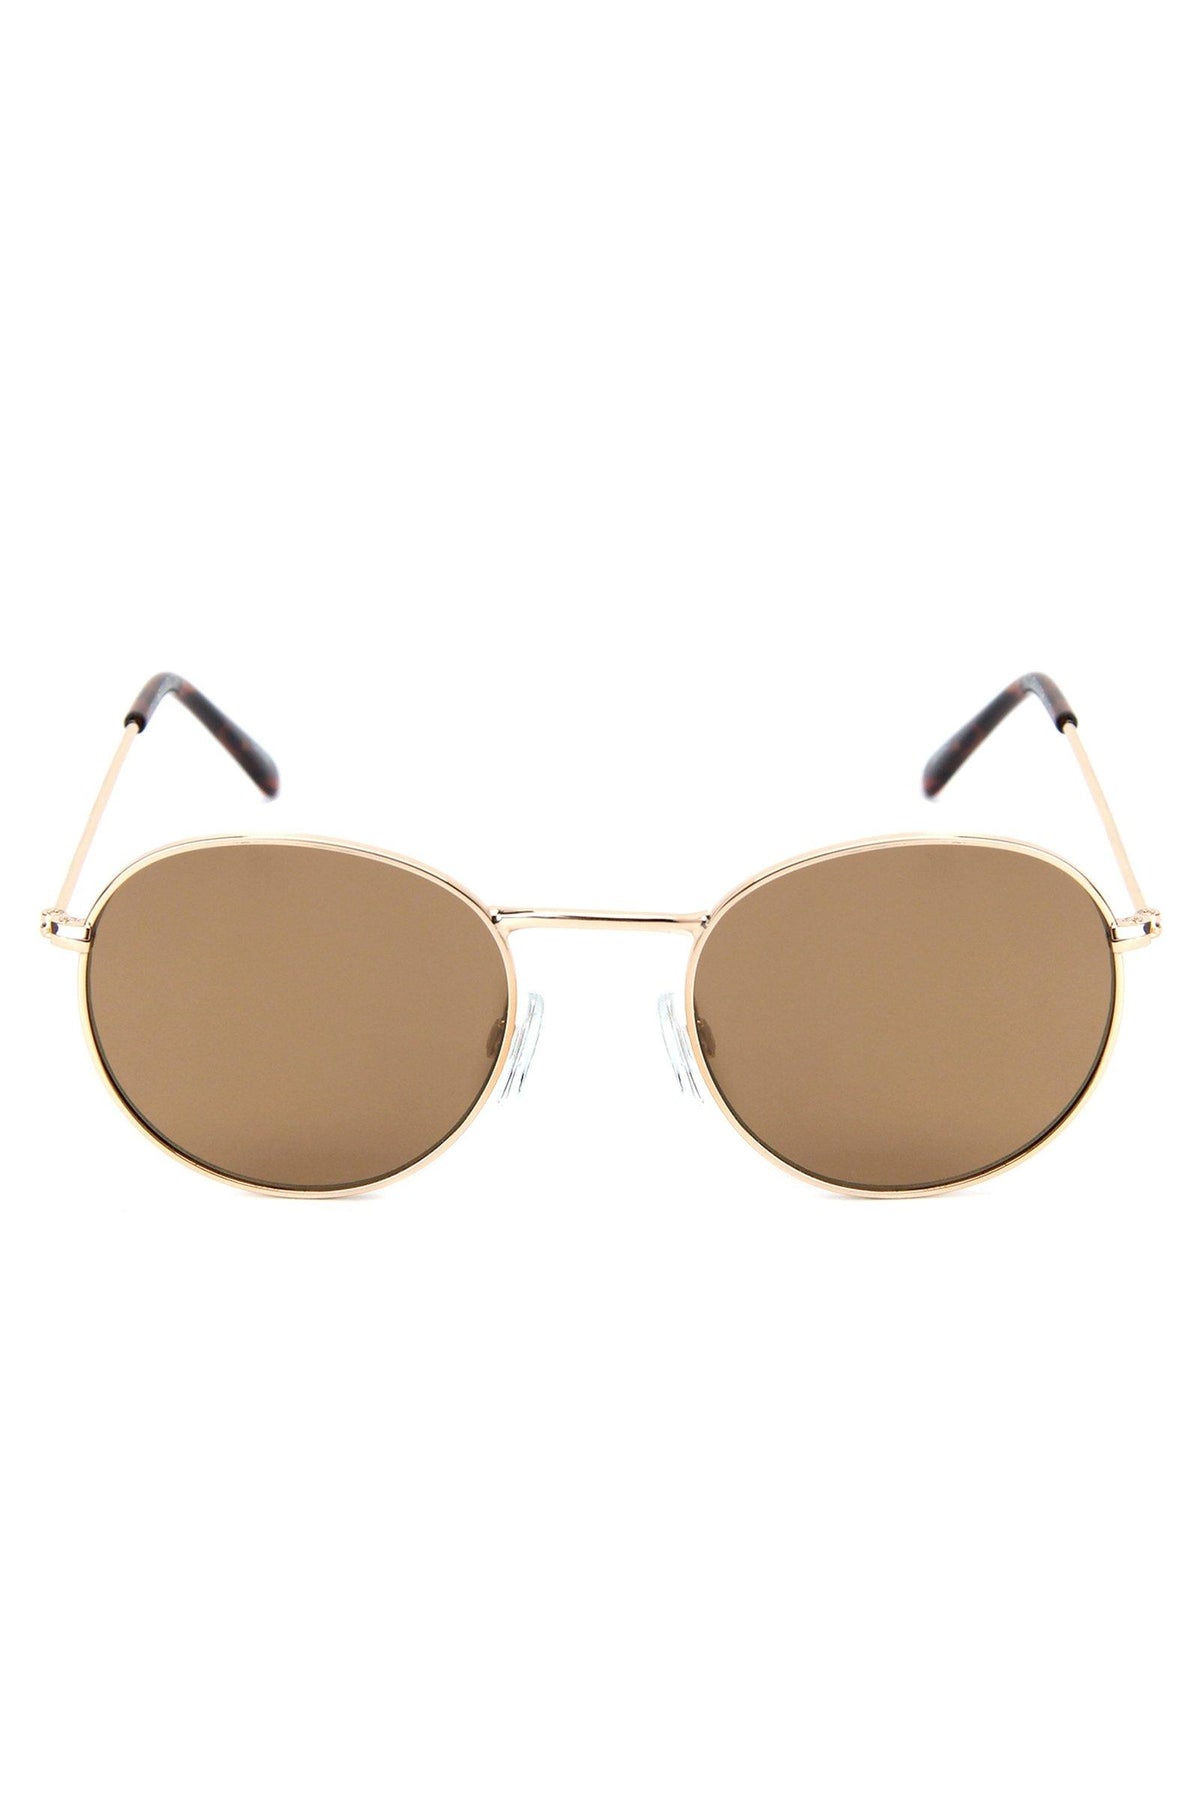 Lucky Brand Colton Wire Sunglasses - Women's Ladies Accessories Sunglasses Gold